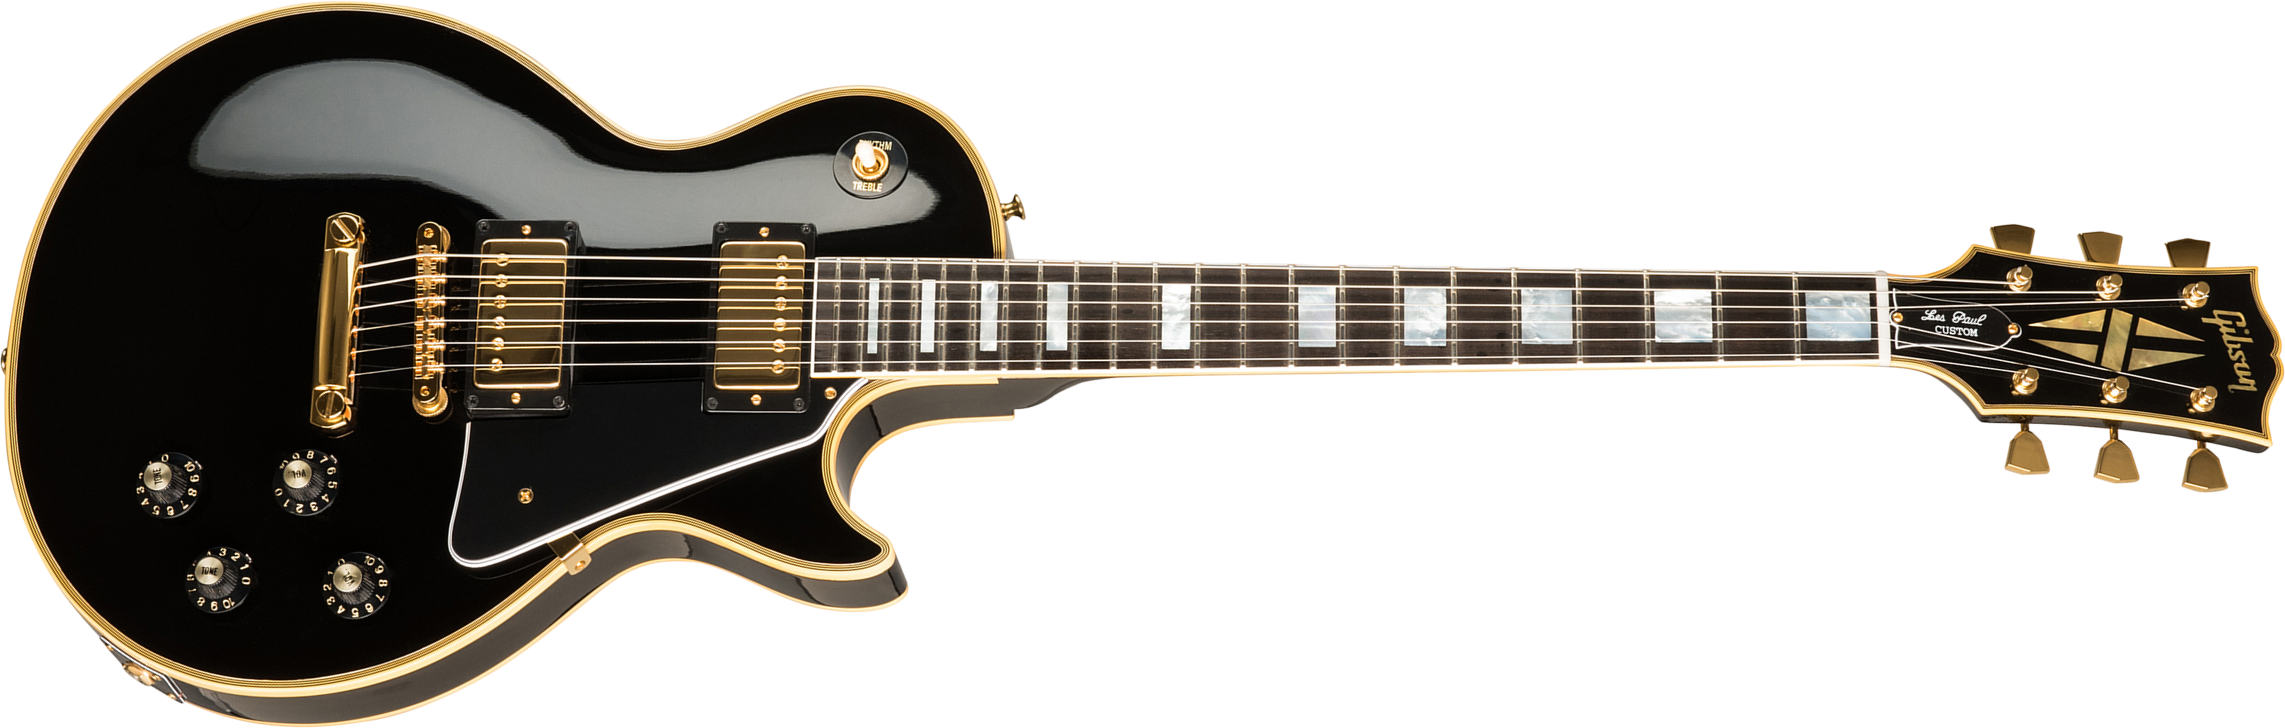 Gibson Custom Shop Les Paul Custom 1968 Reissue 2019 2h Ht Eb - Ebony - Single cut electric guitar - Main picture